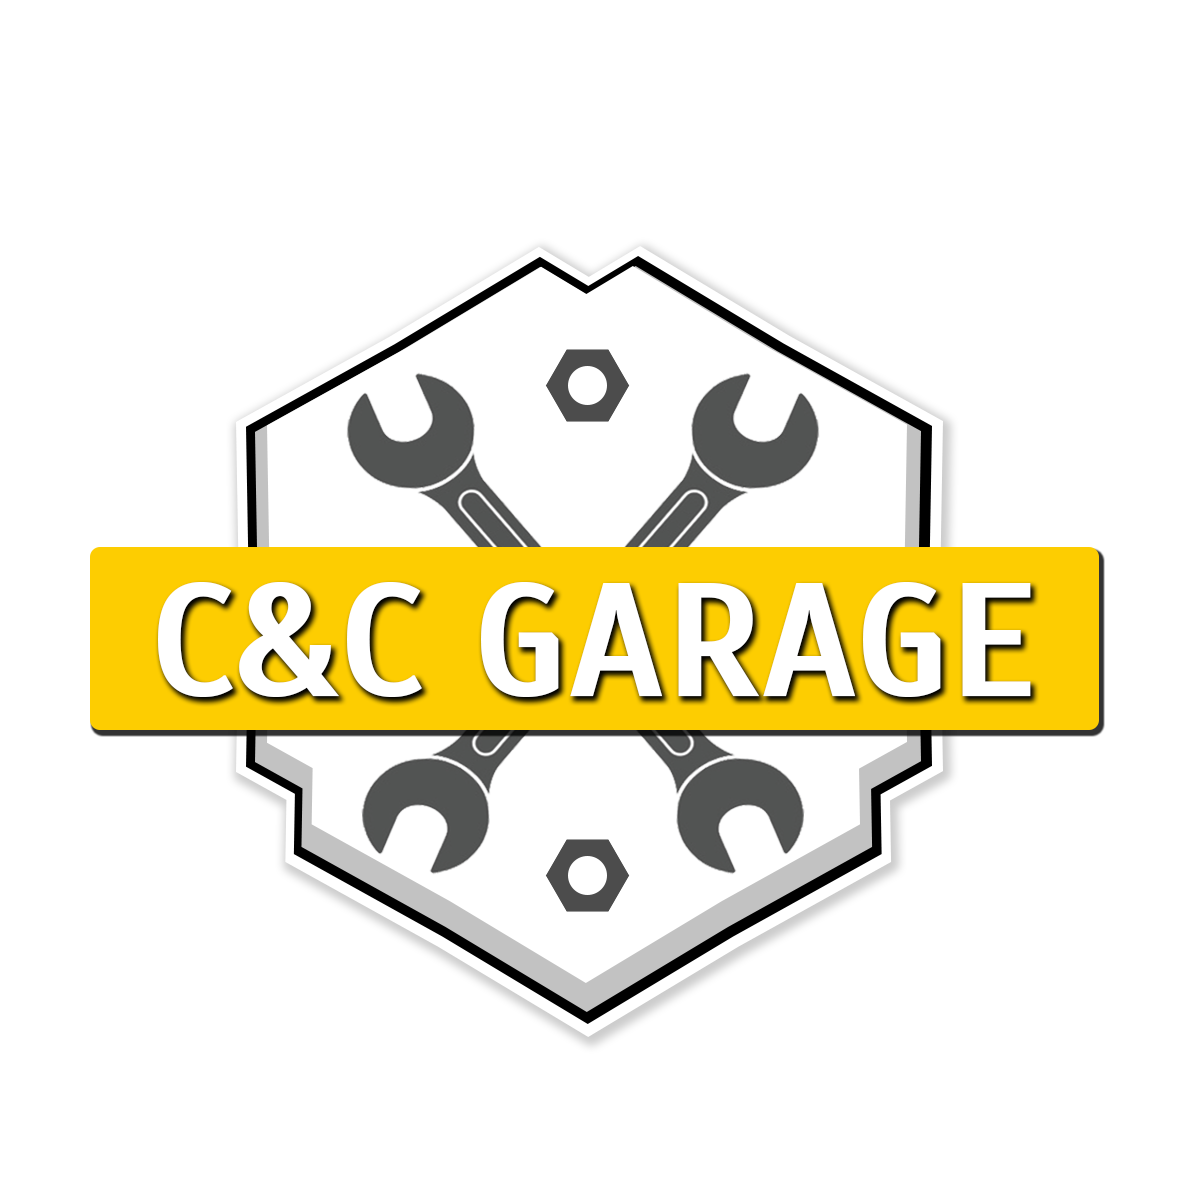 C&C Garage Aarhus logo